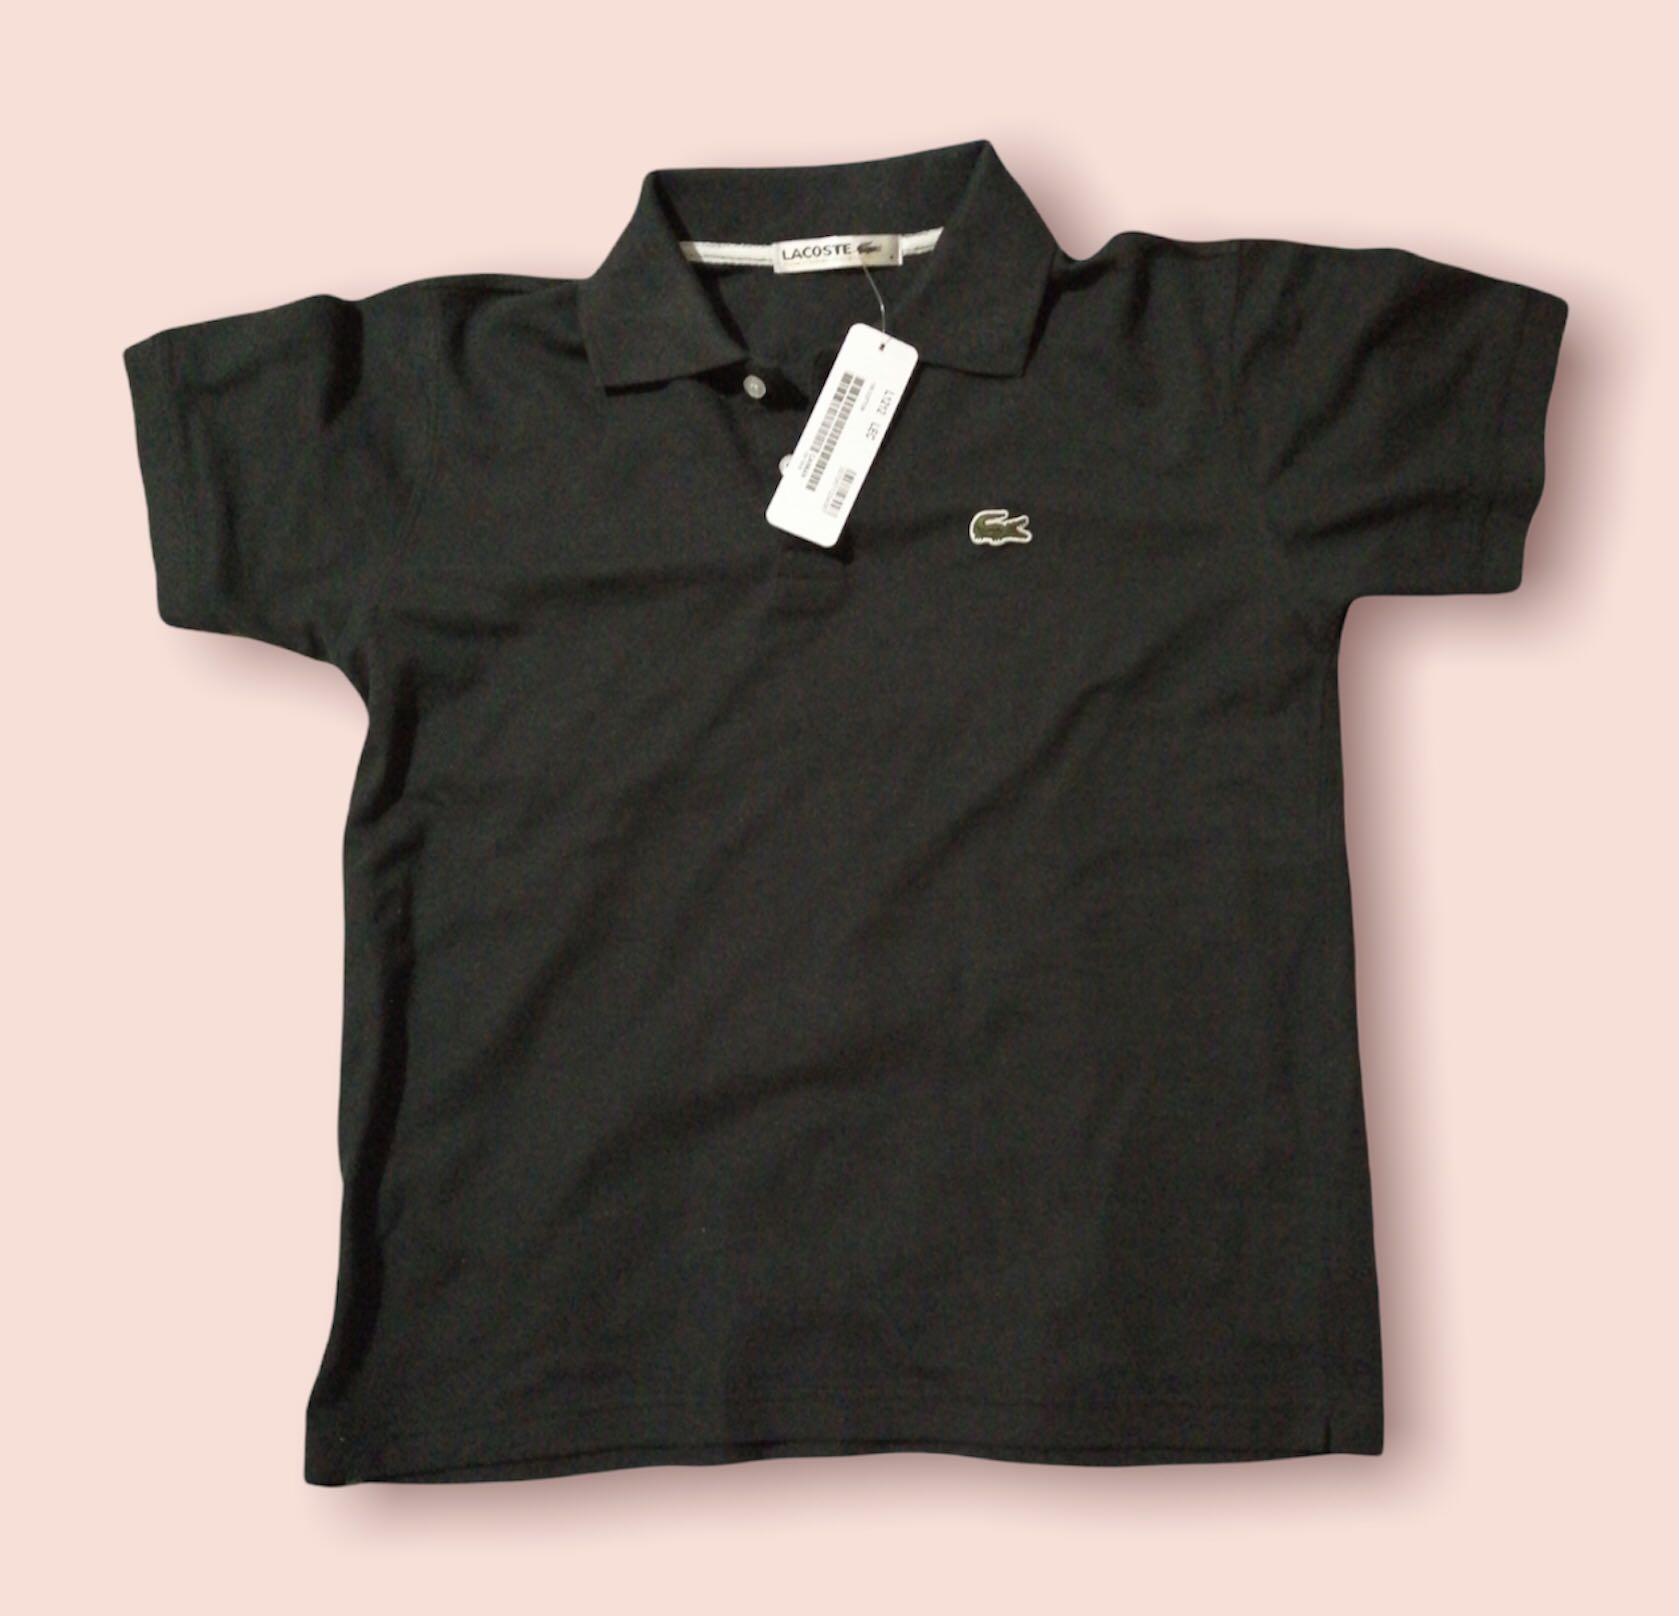 polo shirt for Men (Dark Green), Men's Fashion, Tops & Sets, Tshirts & Polo Shirts on Carousell